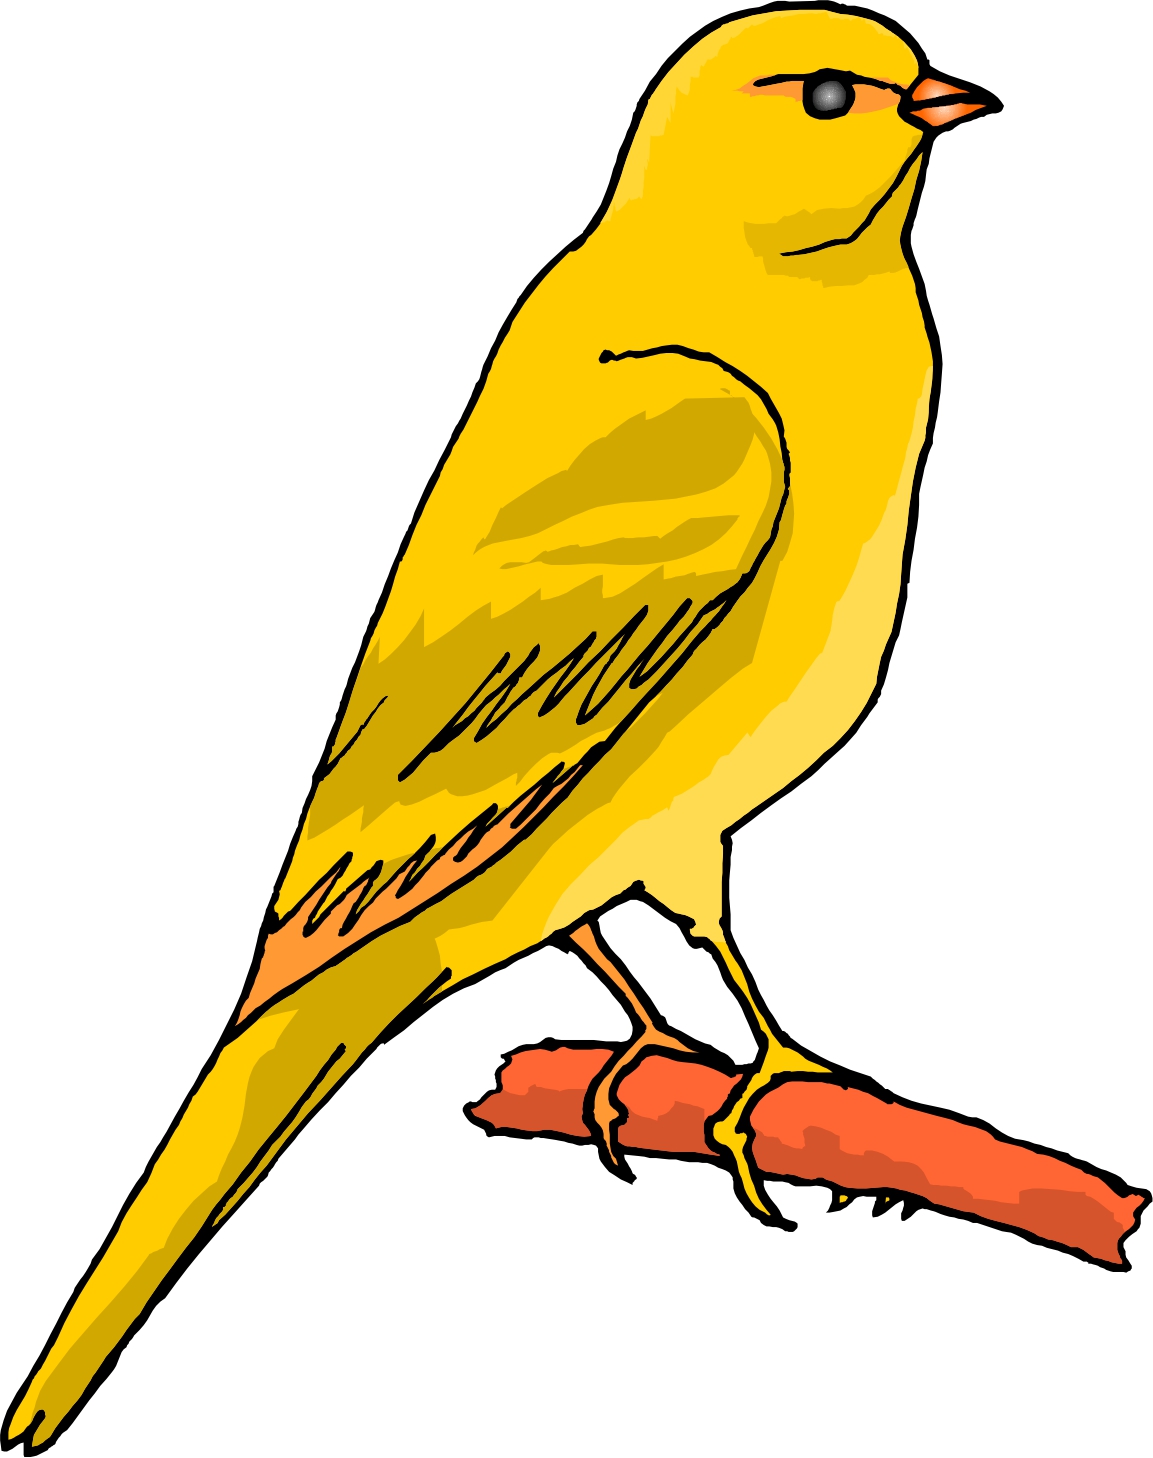 Canary Bird Clipart Etc - ClipArt Best - ClipArt Best